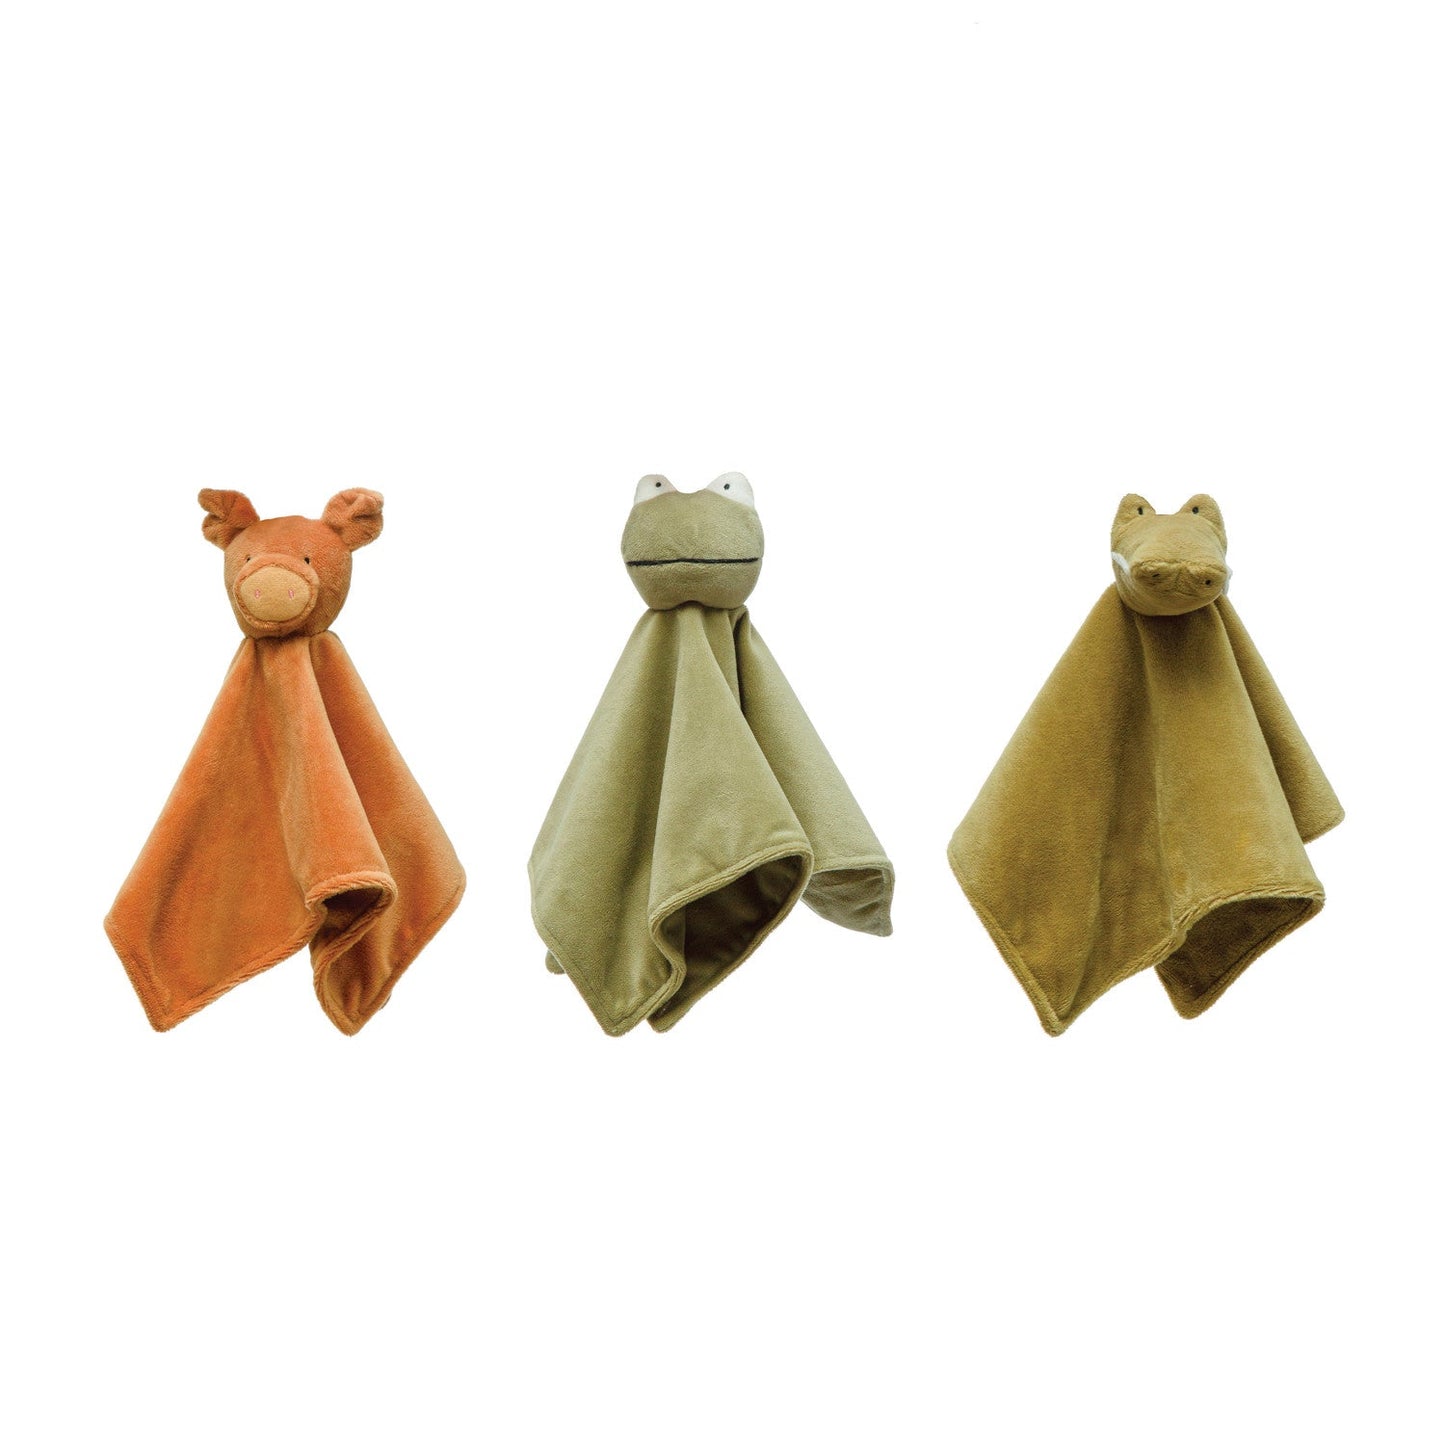 Plush Animal Snuggle Toy, 3 Styles